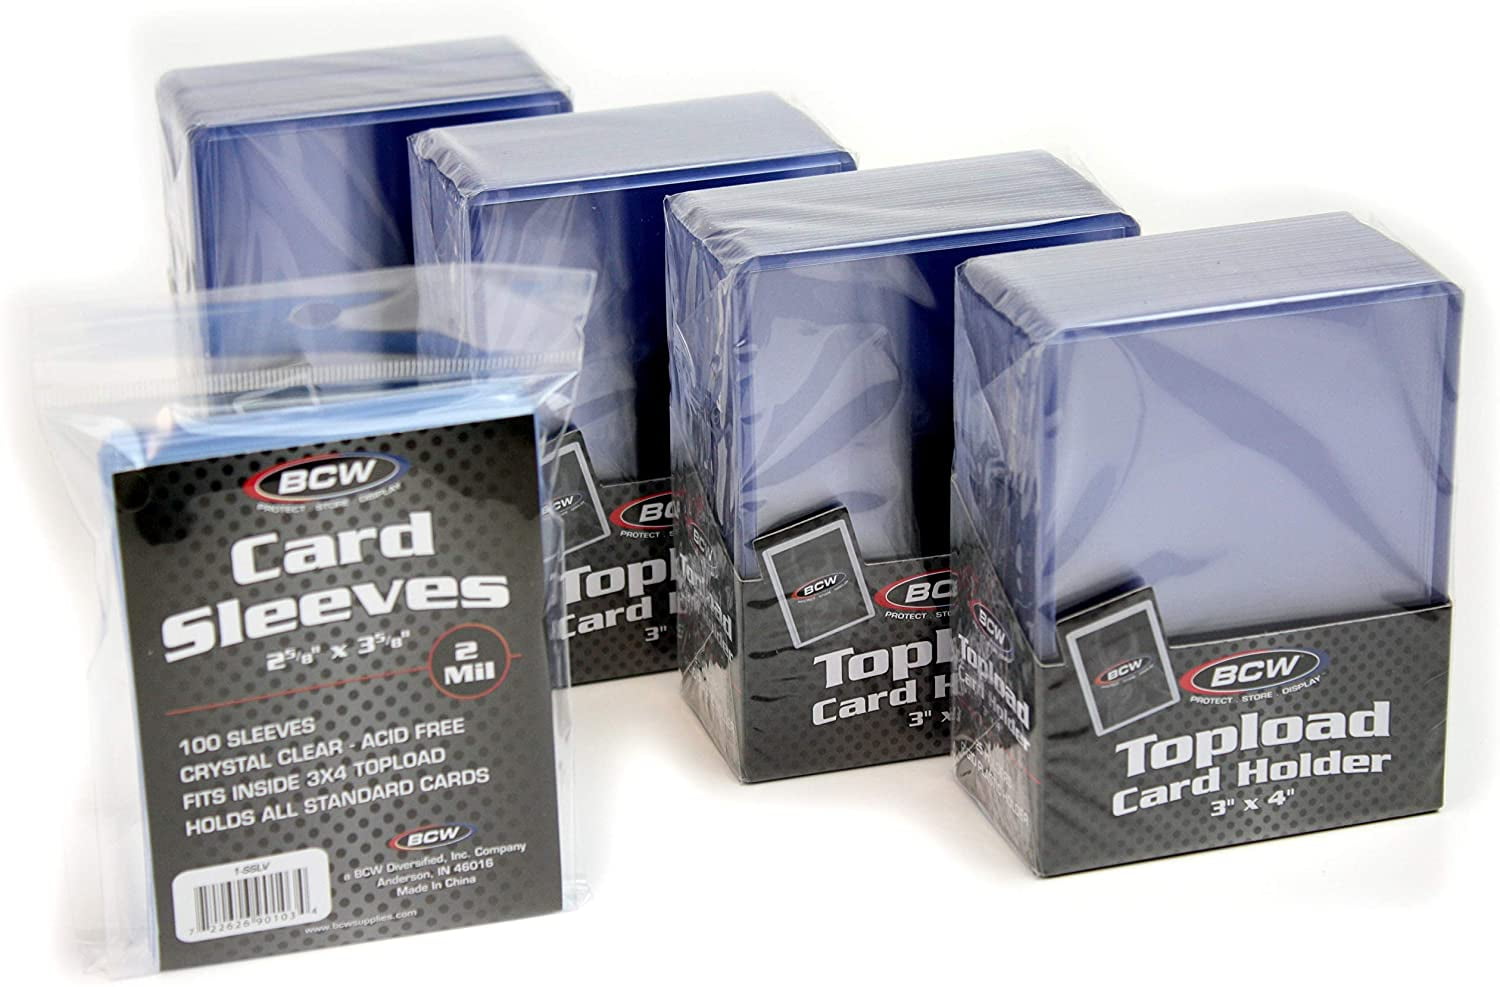 1000 Soft Sleeves New! 10 Packs 1 Case Ultra Pro Topload Card Holder & 1000 